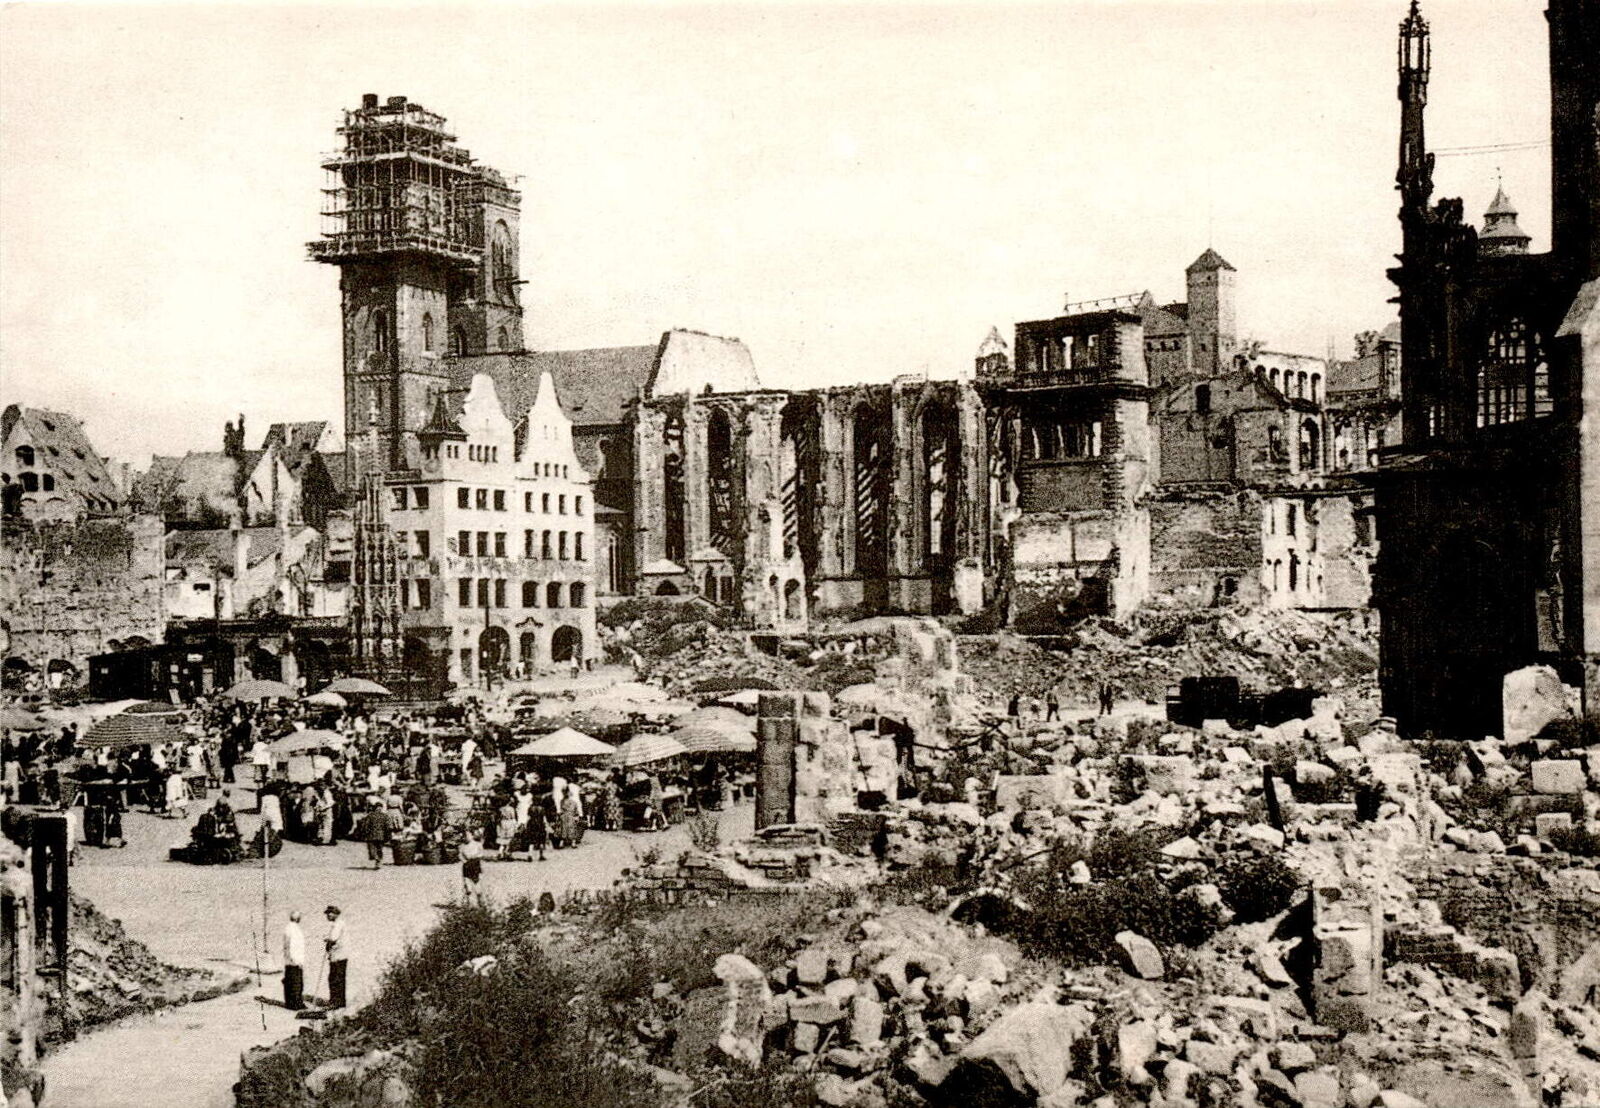 Postcard of Main market in Nuremberg, 1945.